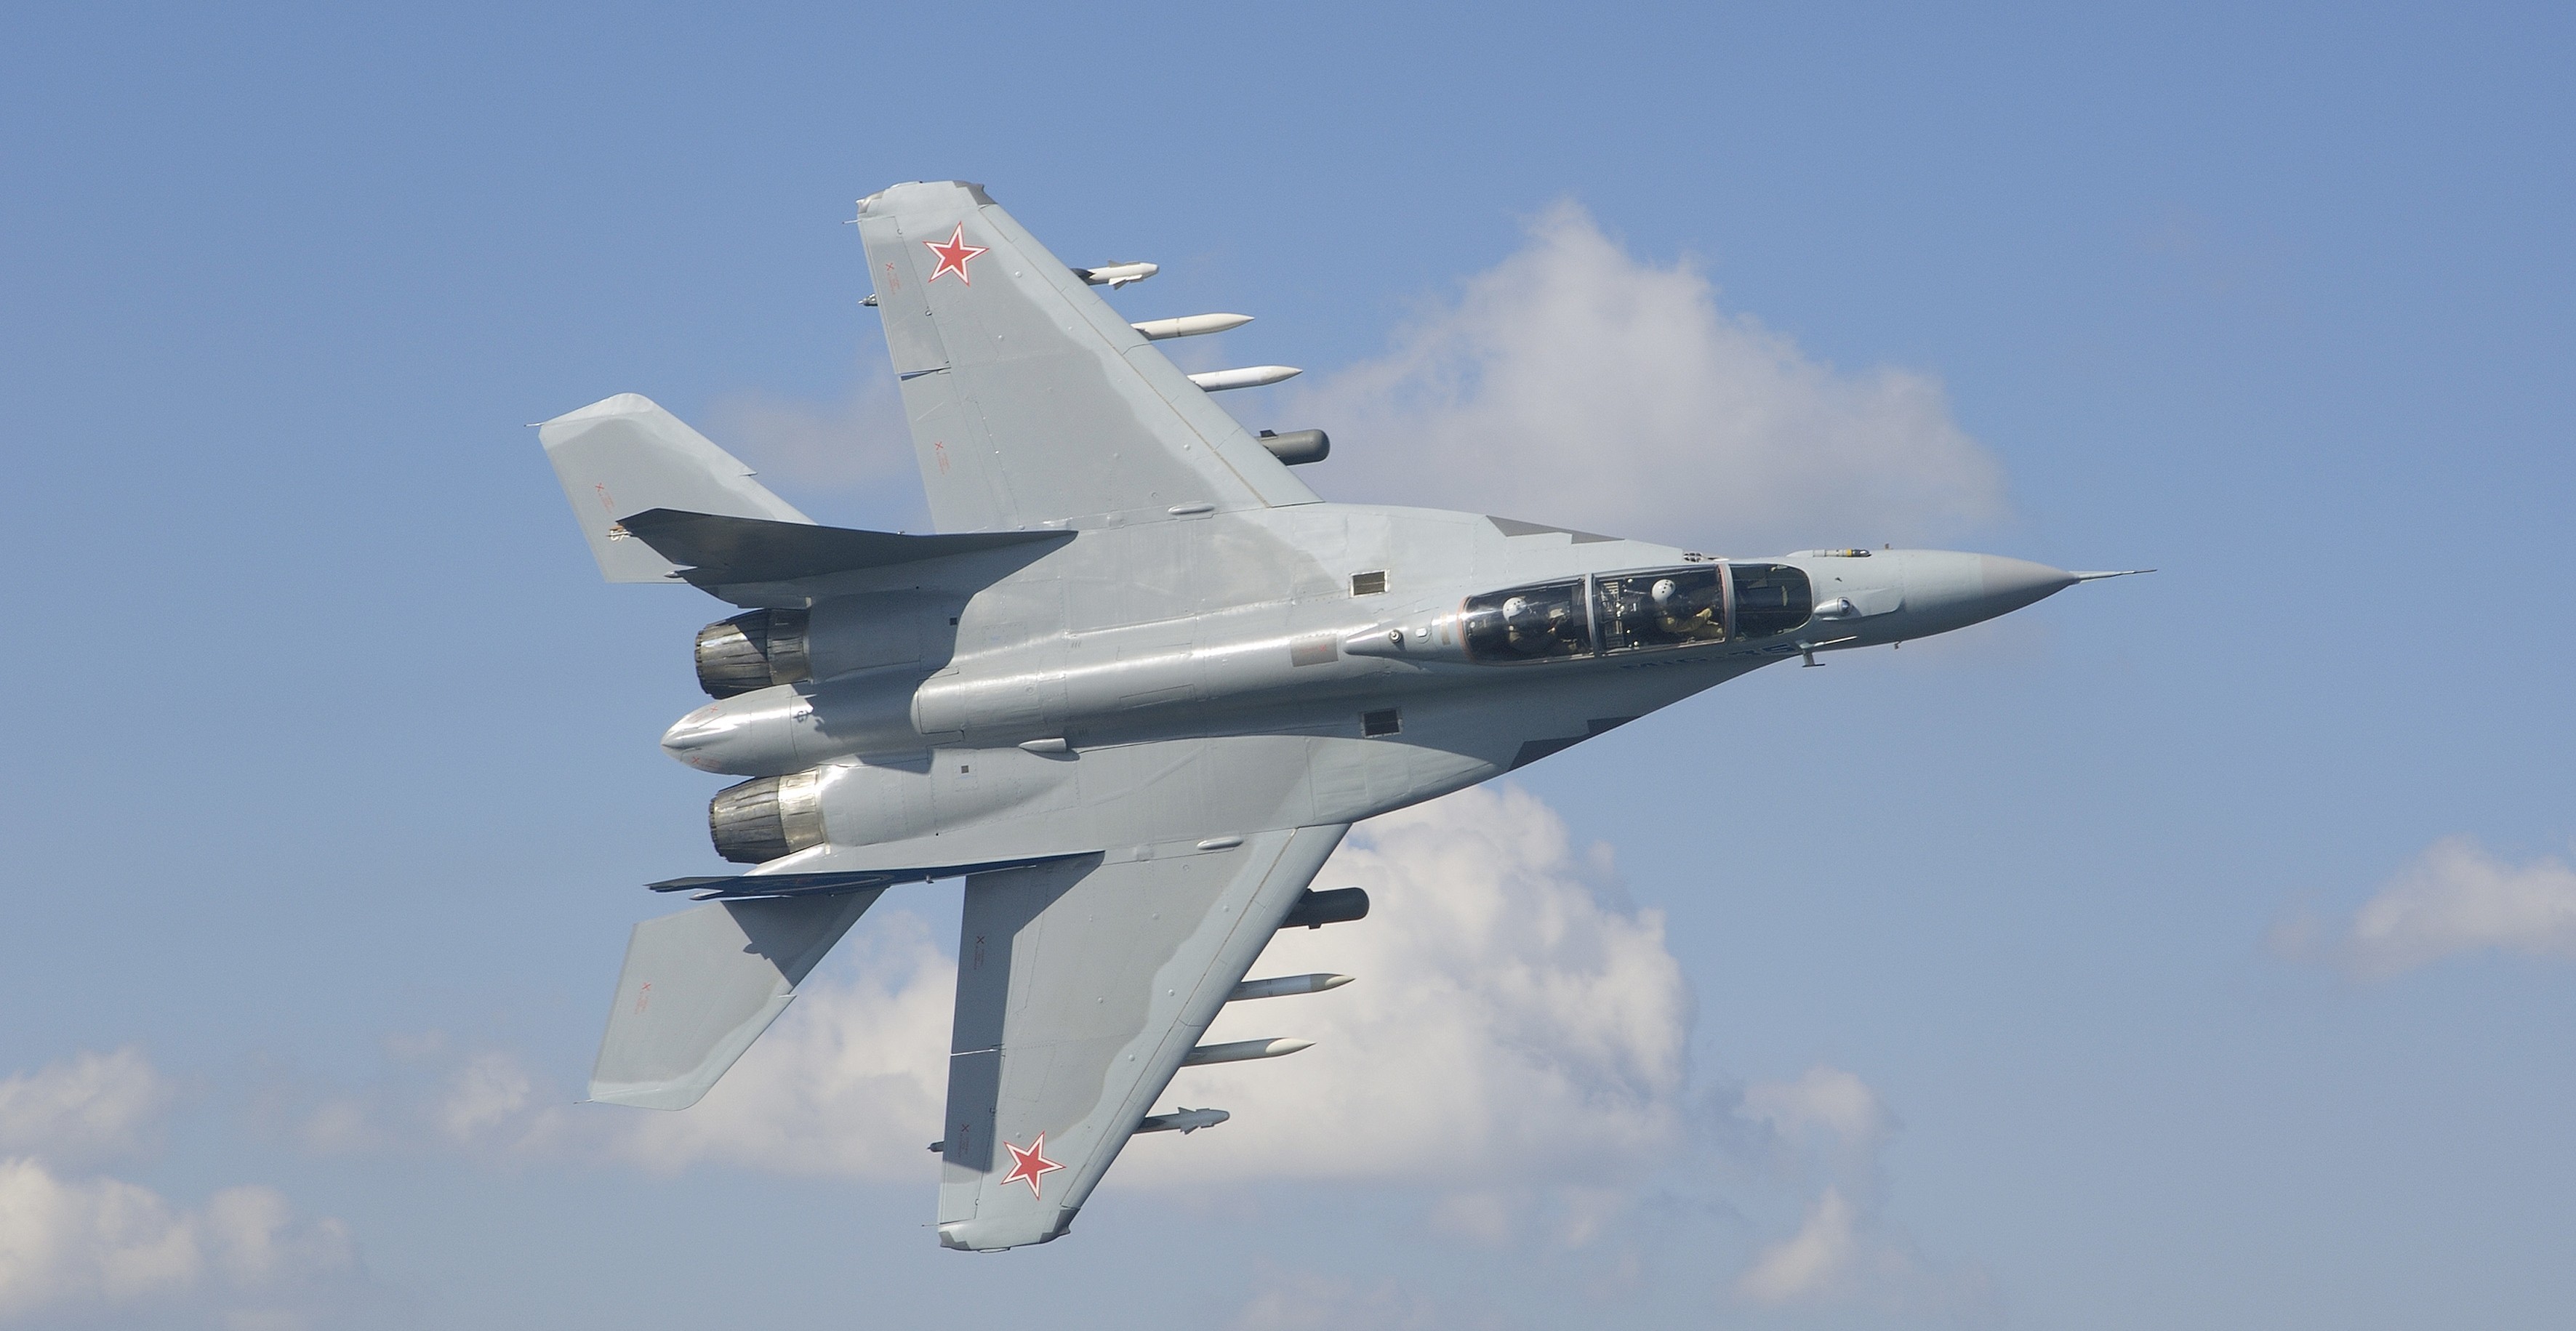 General 3543x1831 Mikoyan MiG-35 Russian Air Force aircraft military vehicle military aircraft military vehicle jet fighter Mikoyan-Gurevich Russian/Soviet aircraft